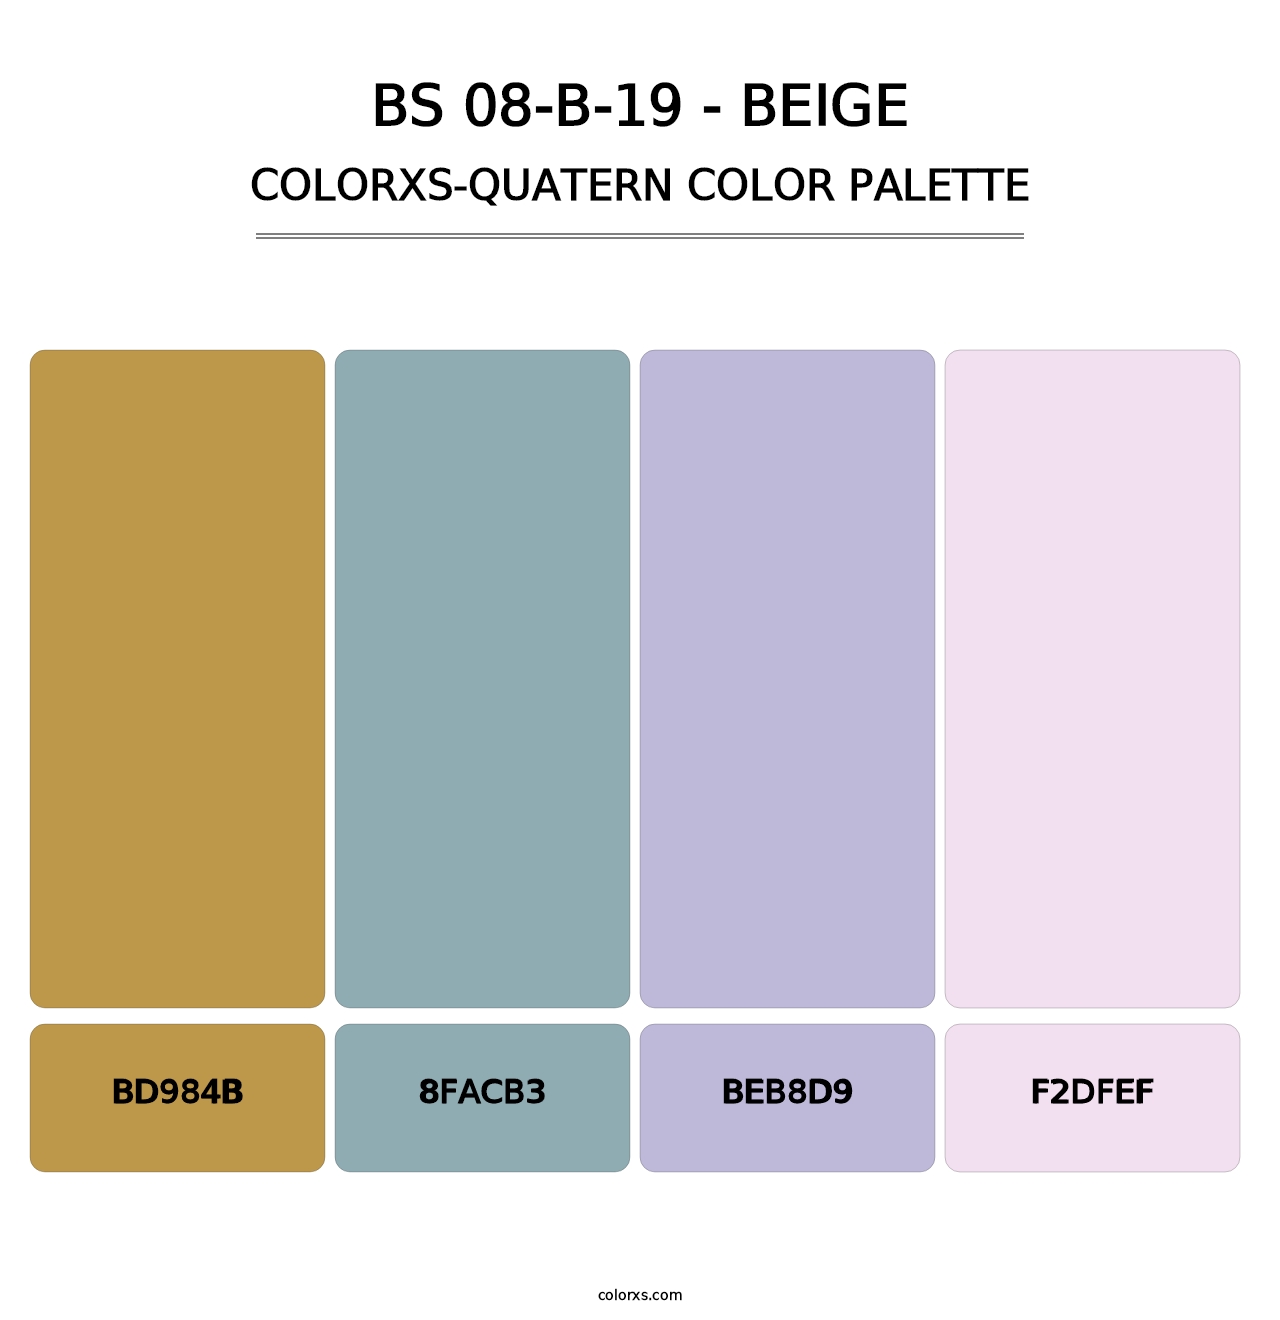 BS 08-B-19 - Beige - Colorxs Quatern Palette